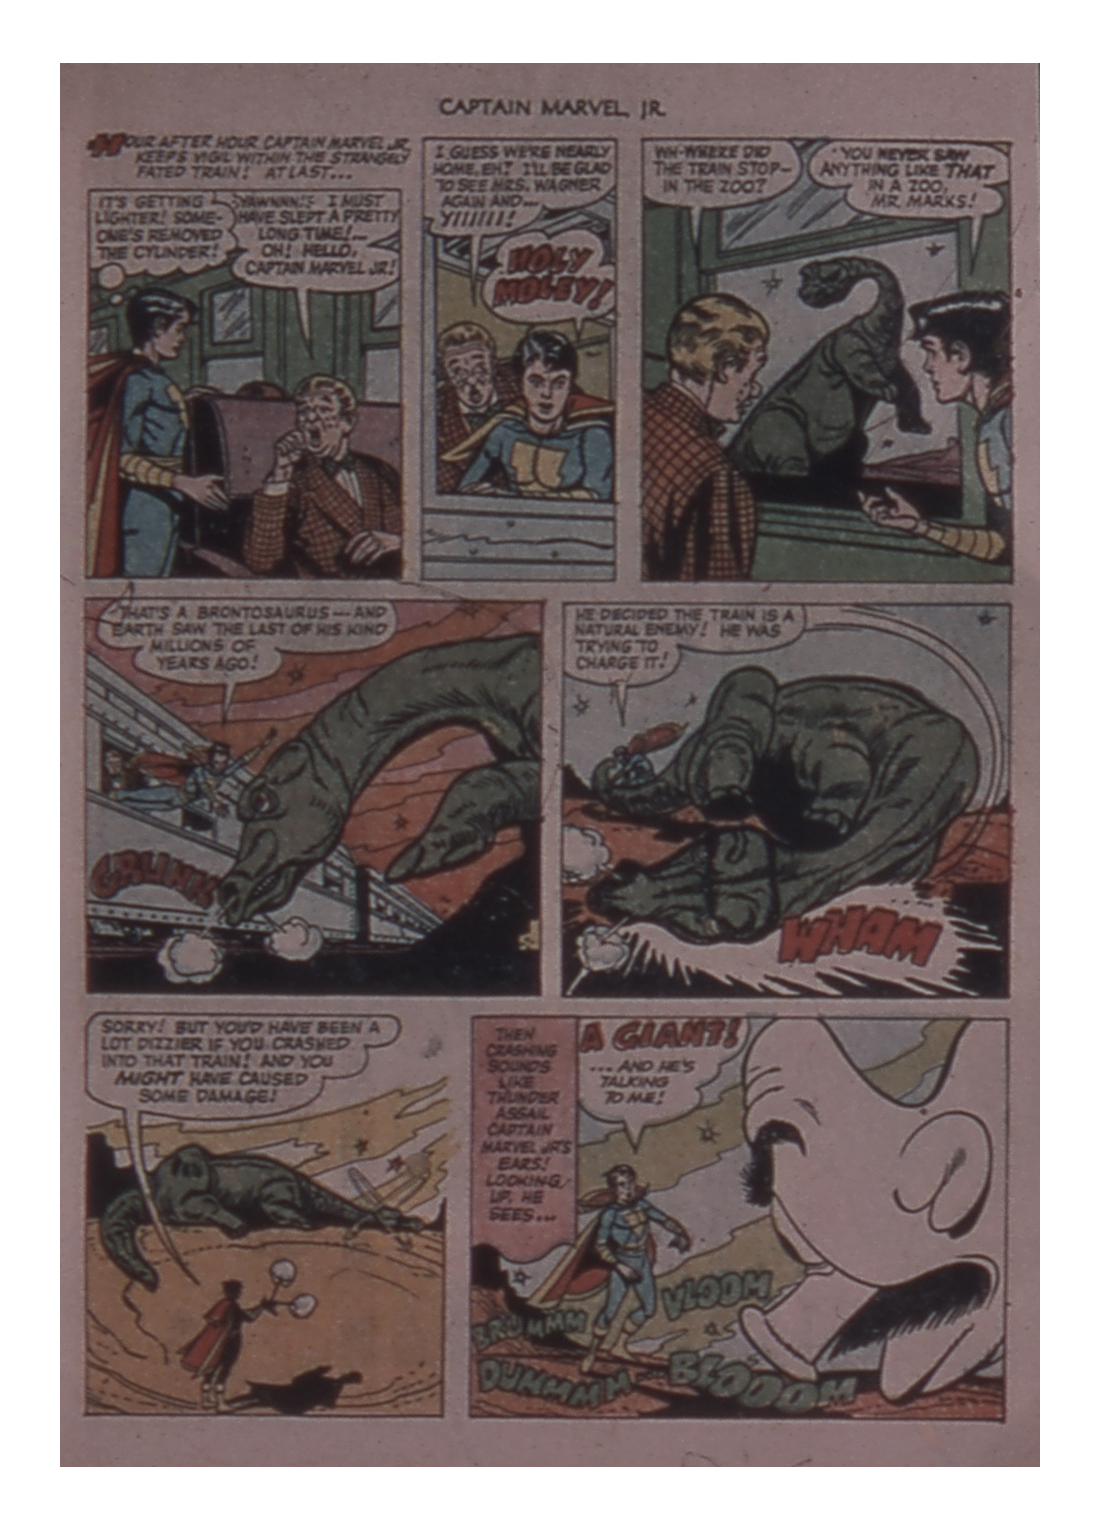 Read online Captain Marvel, Jr. comic -  Issue #114 - 7